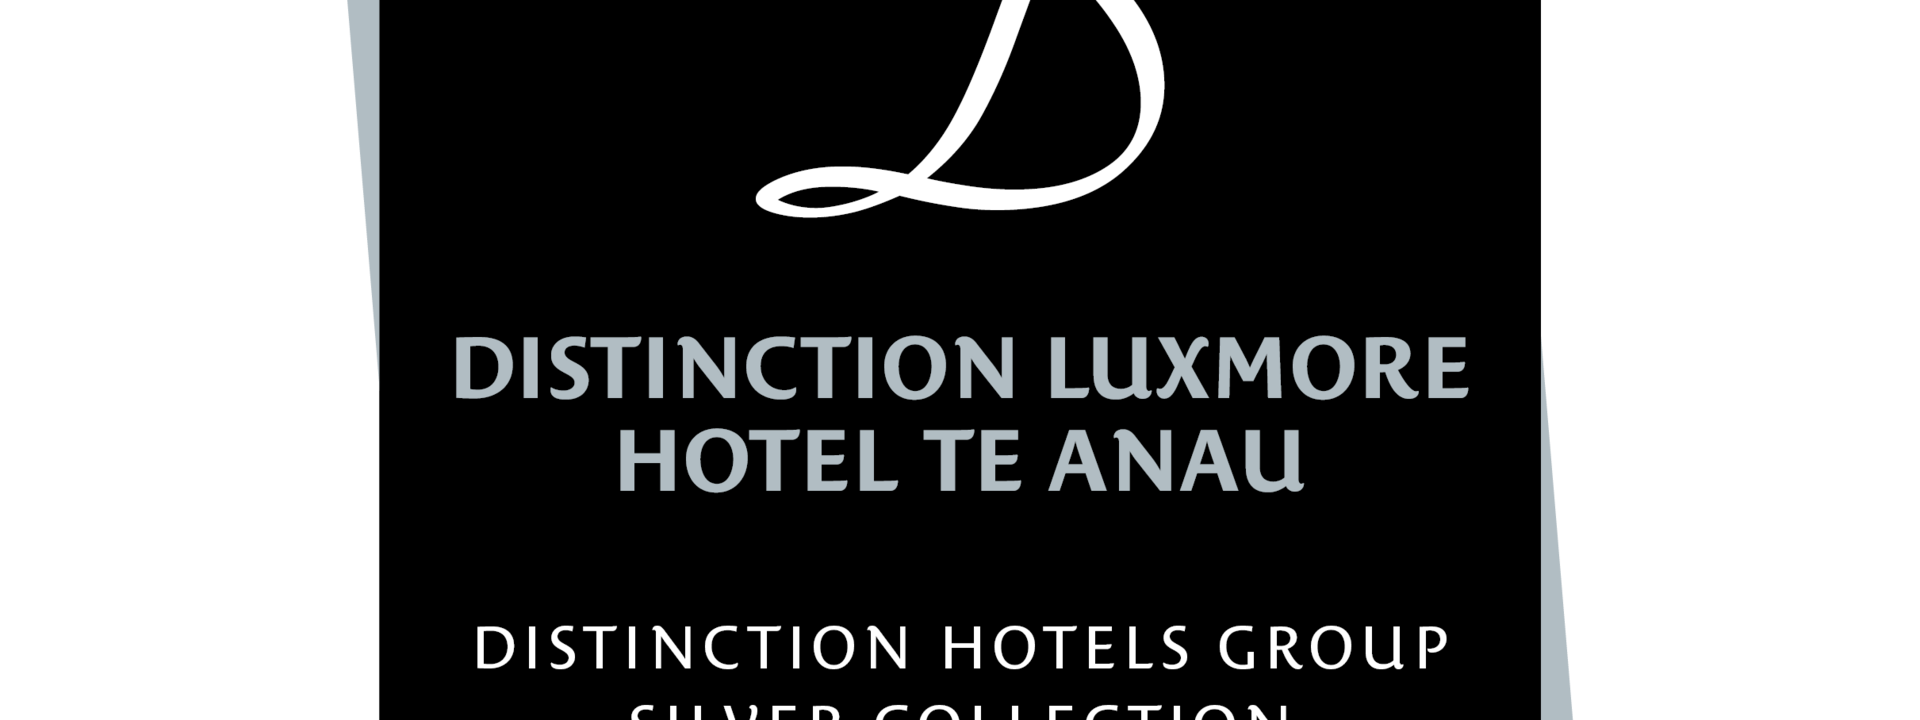 Distinction Luxmore Hotel Te Anau Logo4 PNG.png